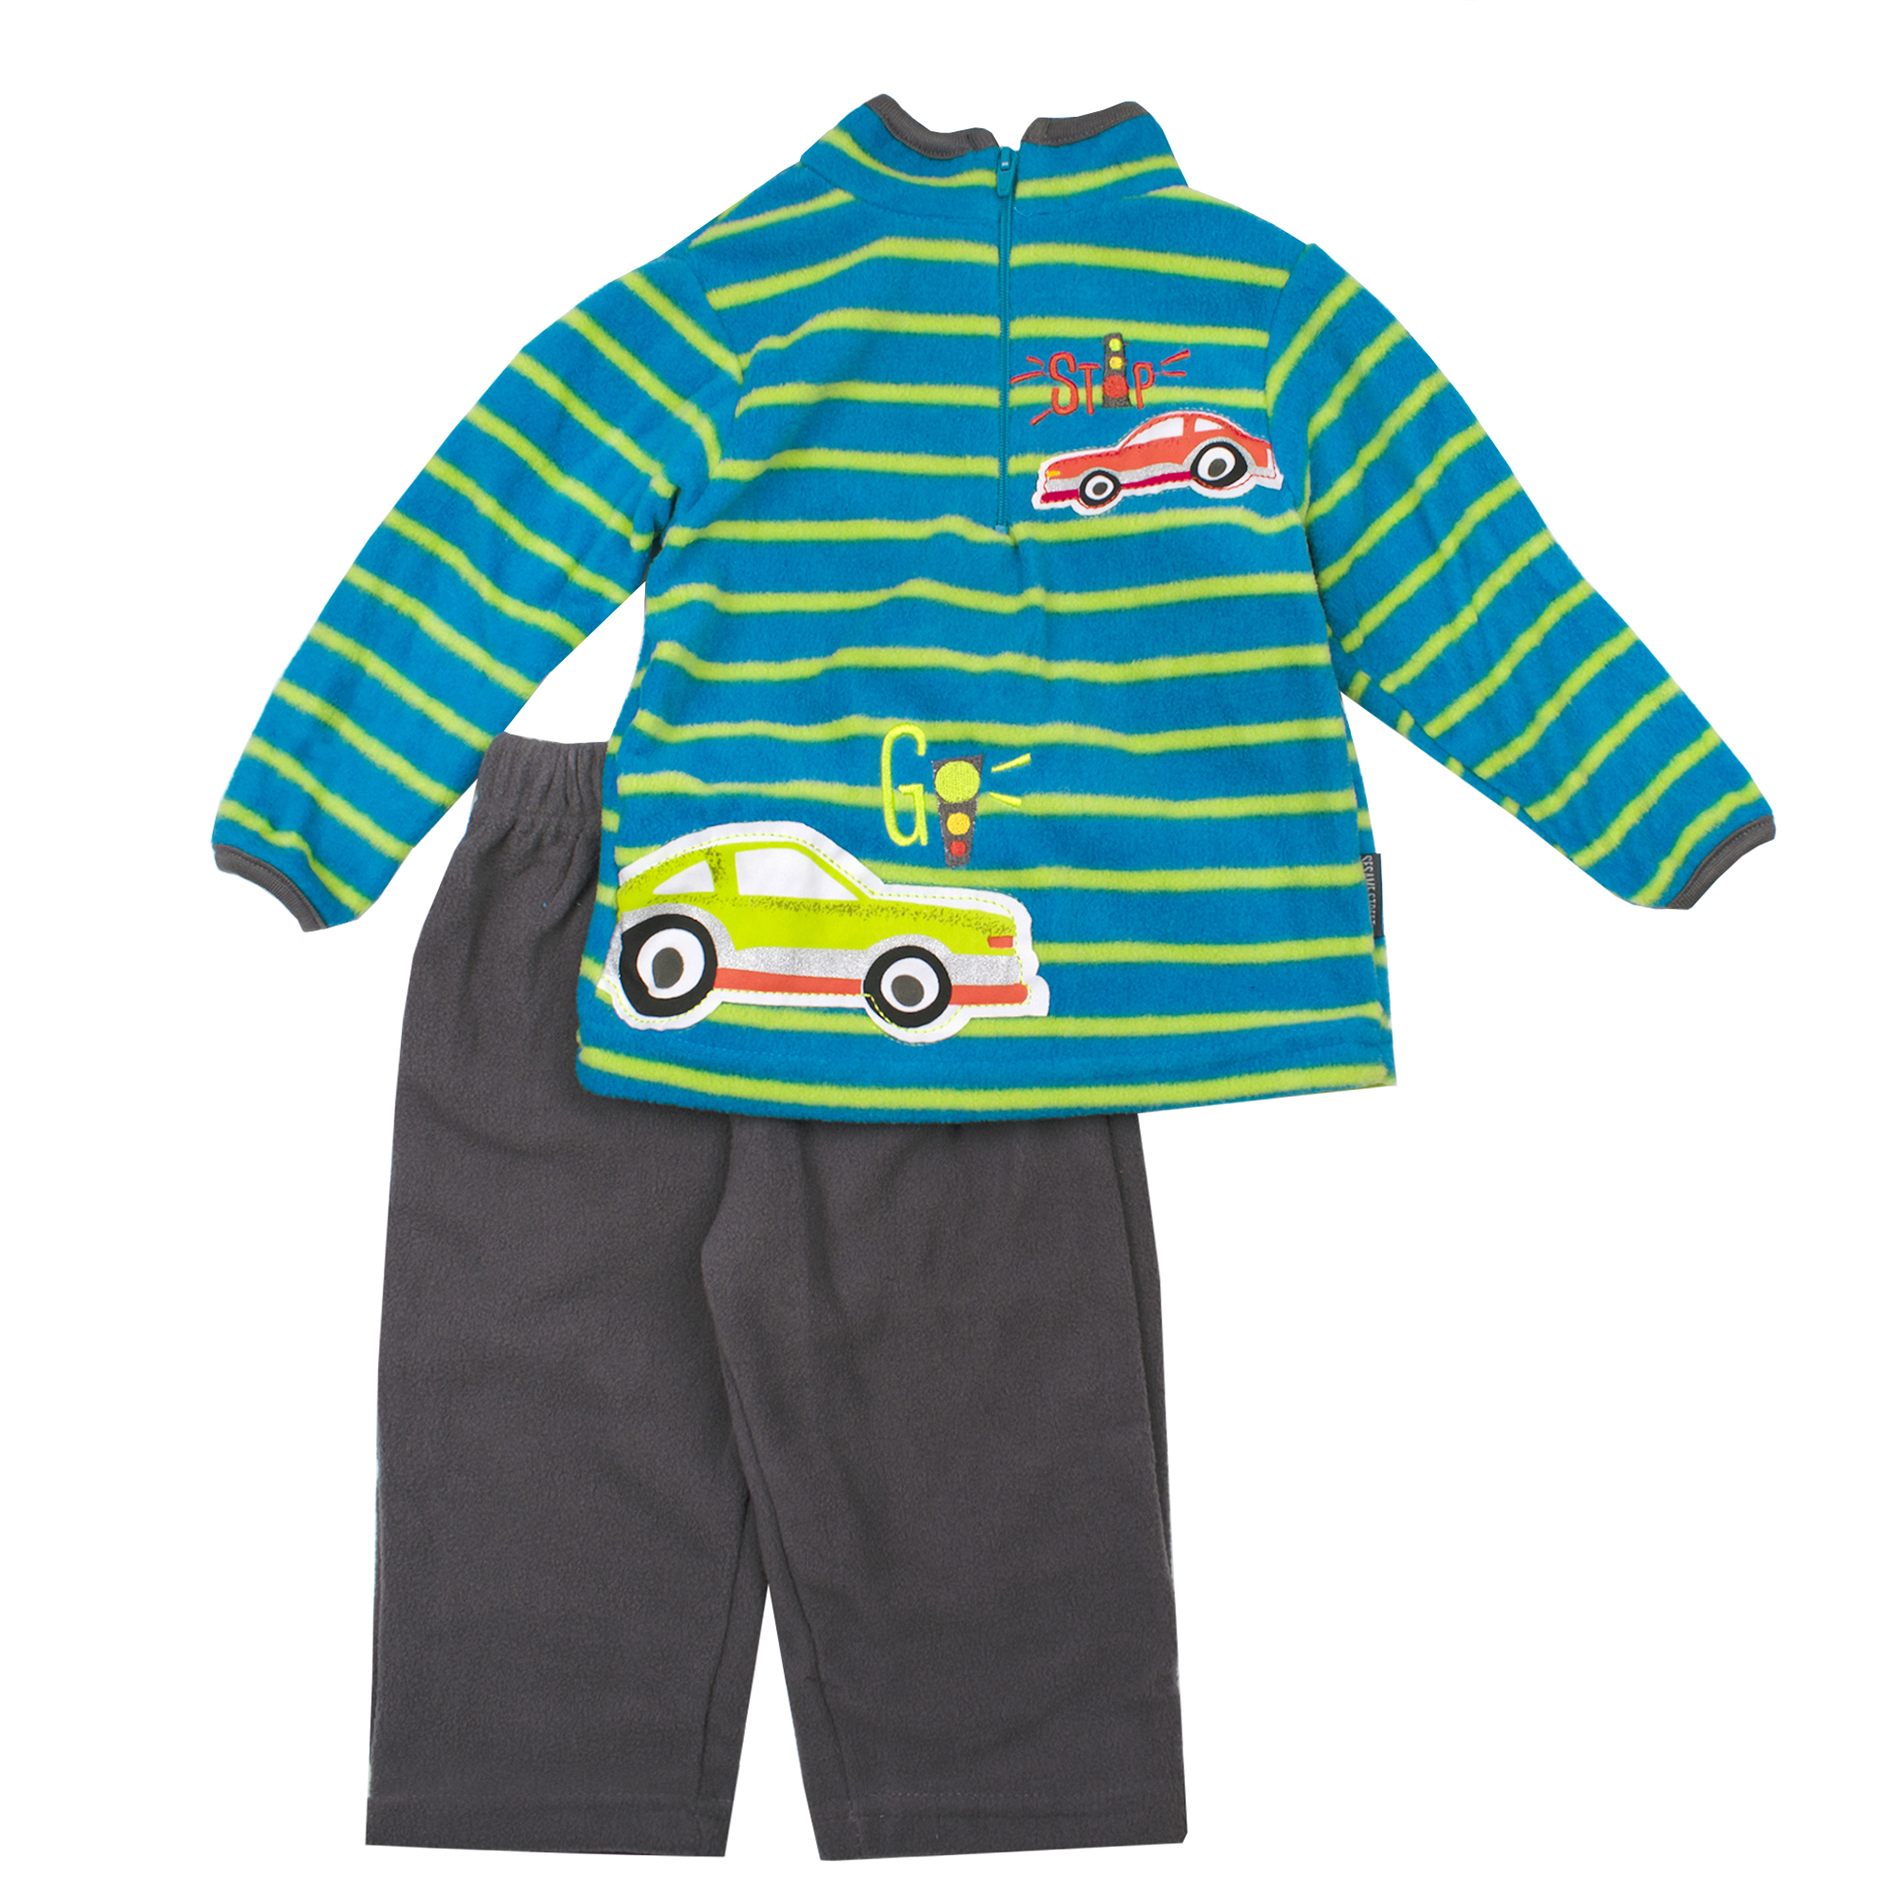 Children's Apparel Infant Boys' Sweatshirt & Pants - Striped & Cars